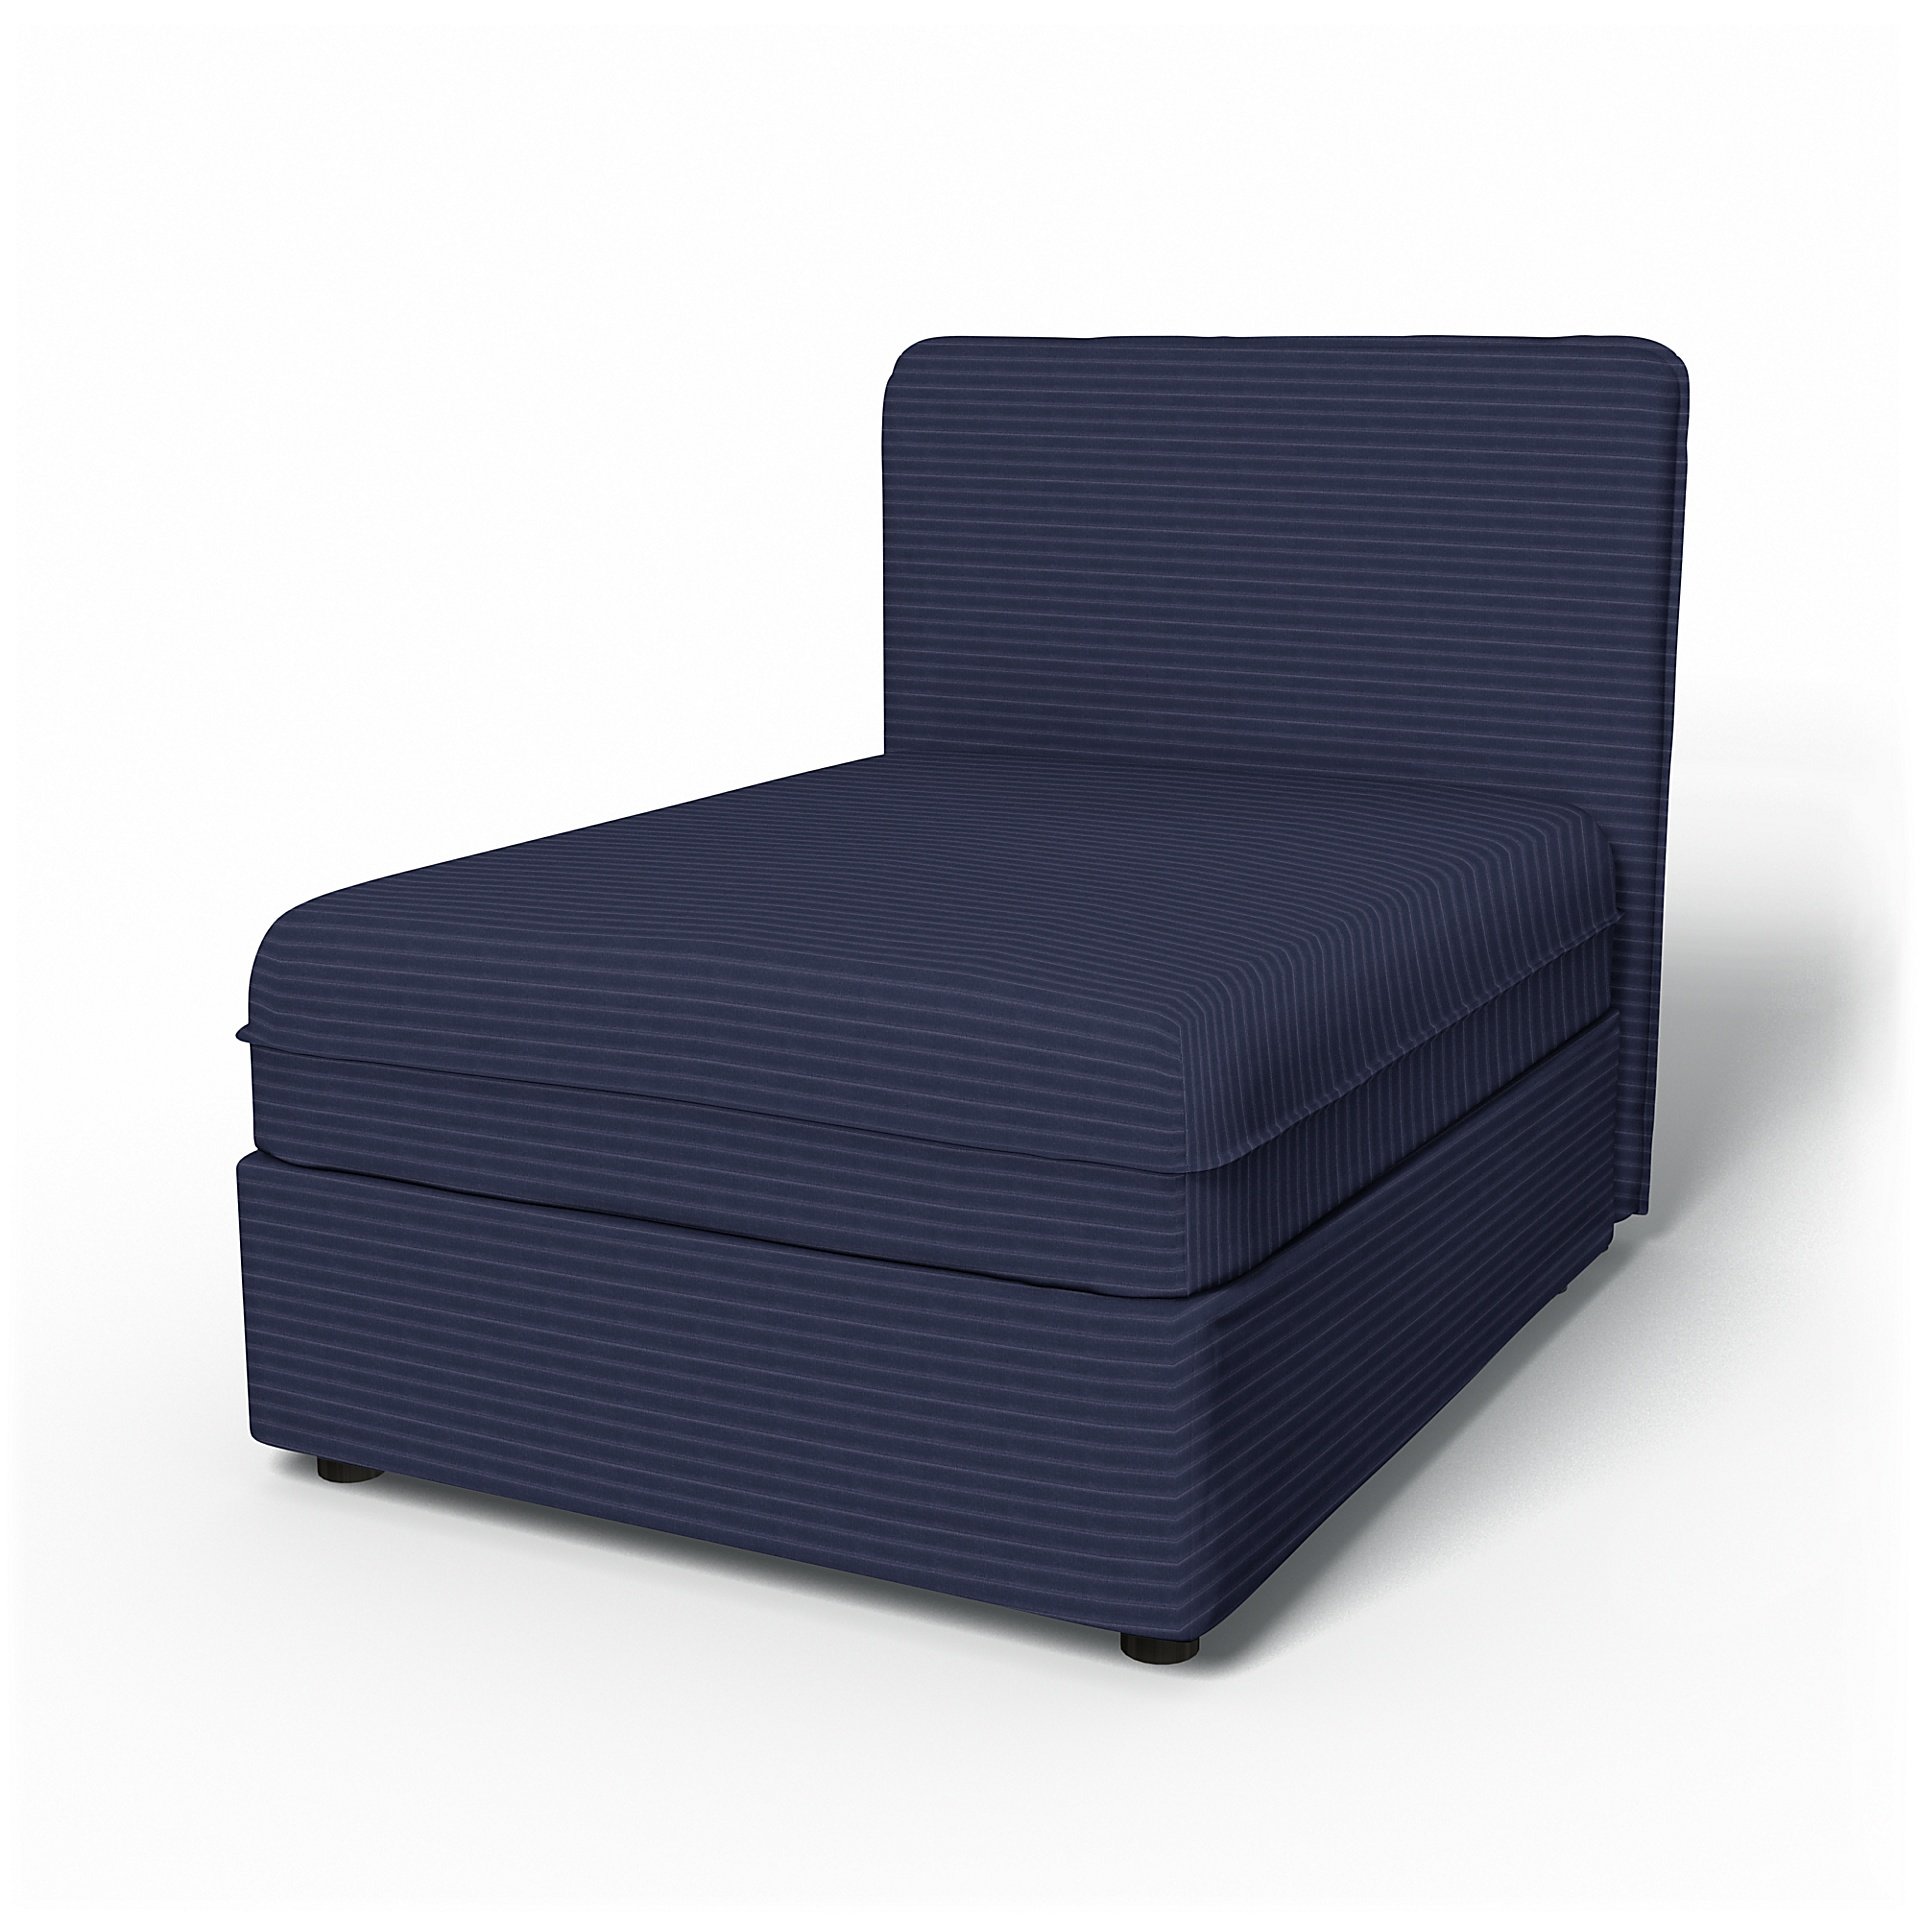 IKEA - Vallentuna Seat Module with Low Back Cover 80x100cm 32x39in, Volcanic Ash, Corduroy - Bemz